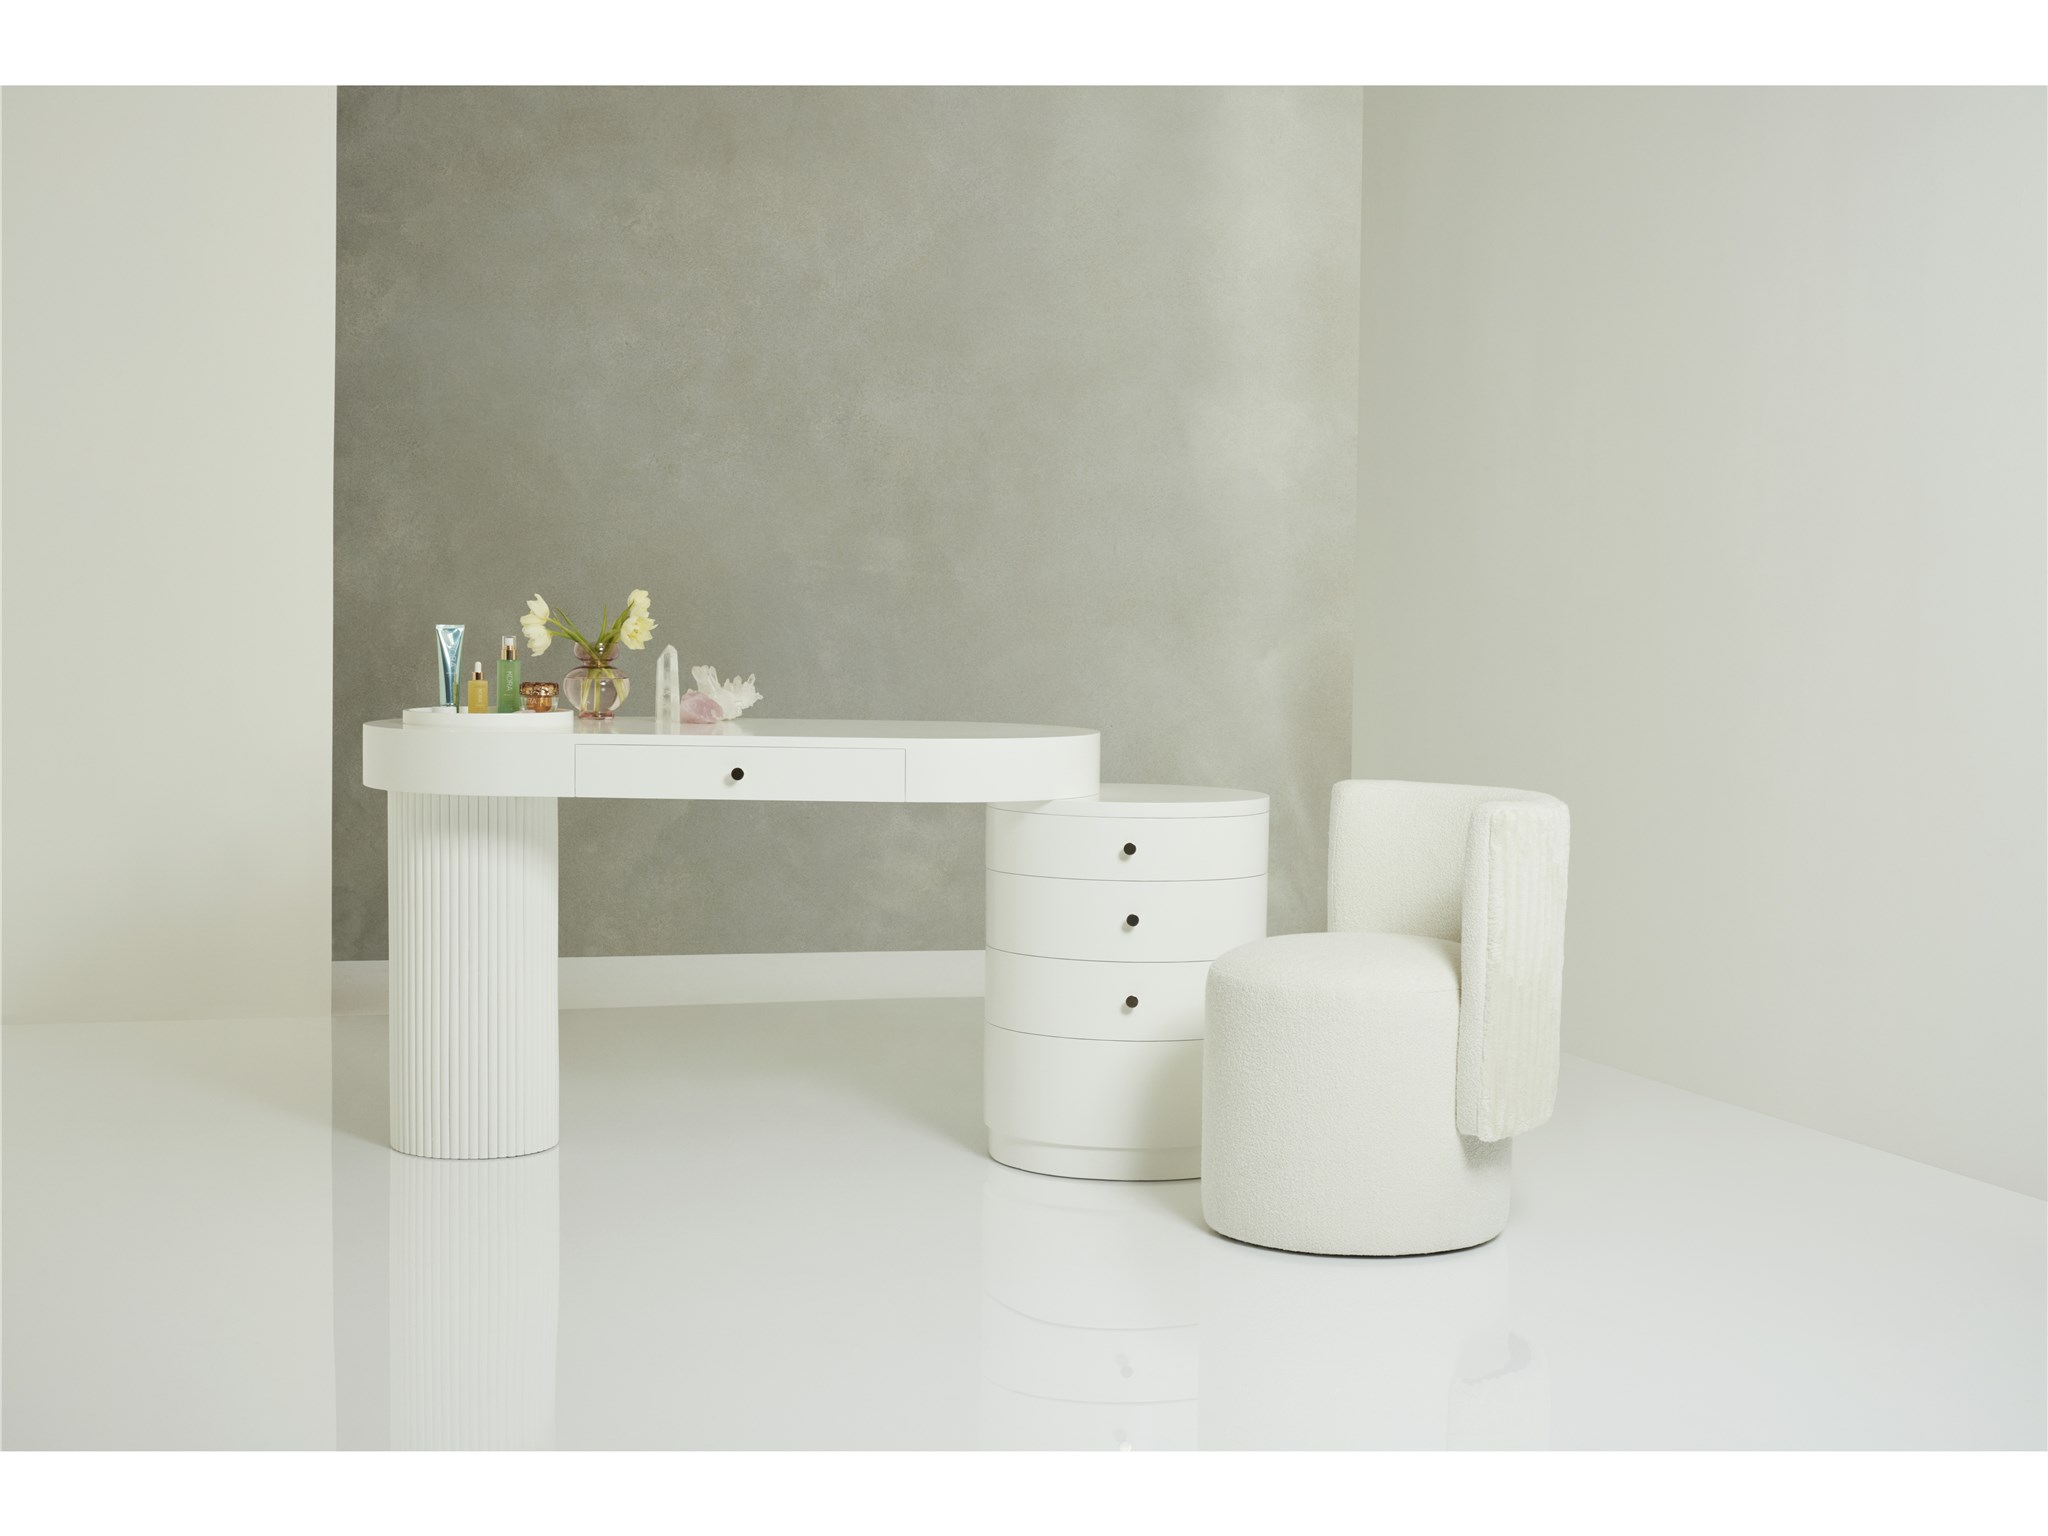 Tranquility - Miranda Kerr Home | Universal Furniture Vanity Mode Chair